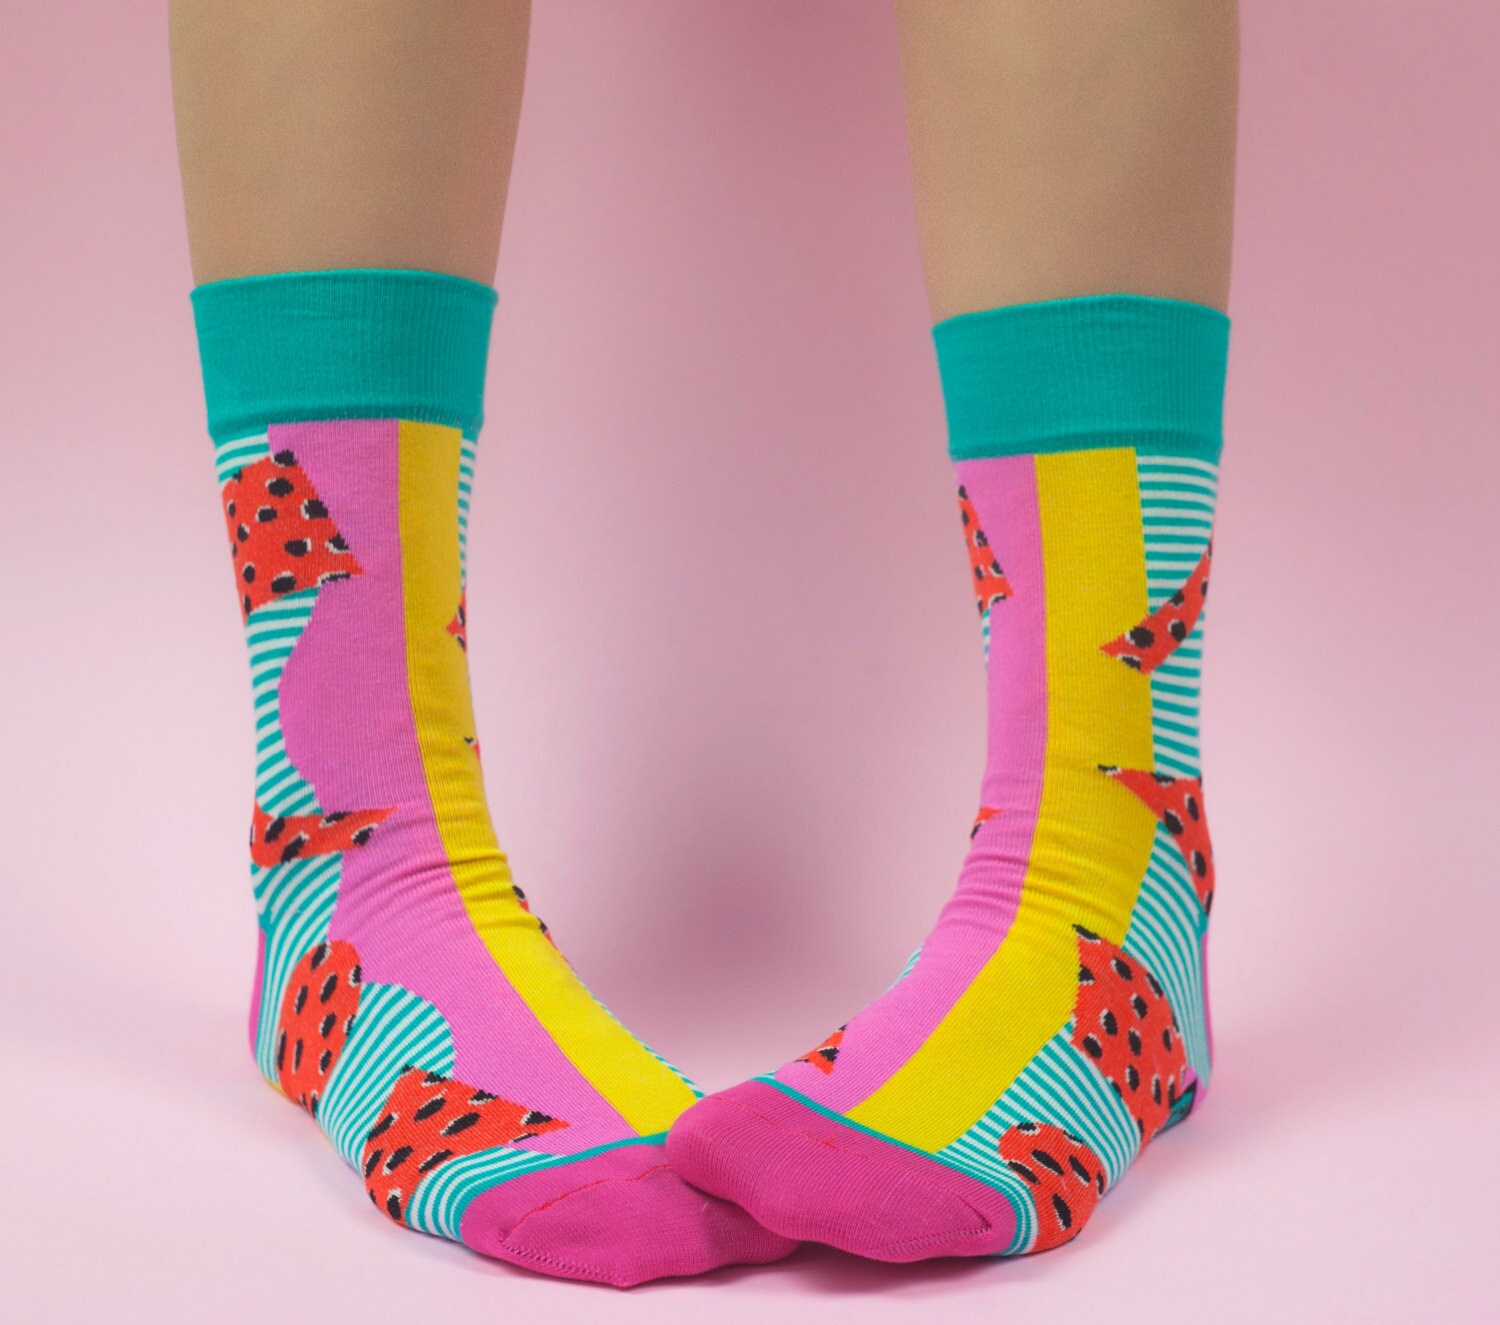 YUMI Watermelon socks Mens Summer Socks Colorful Socks for | Etsy